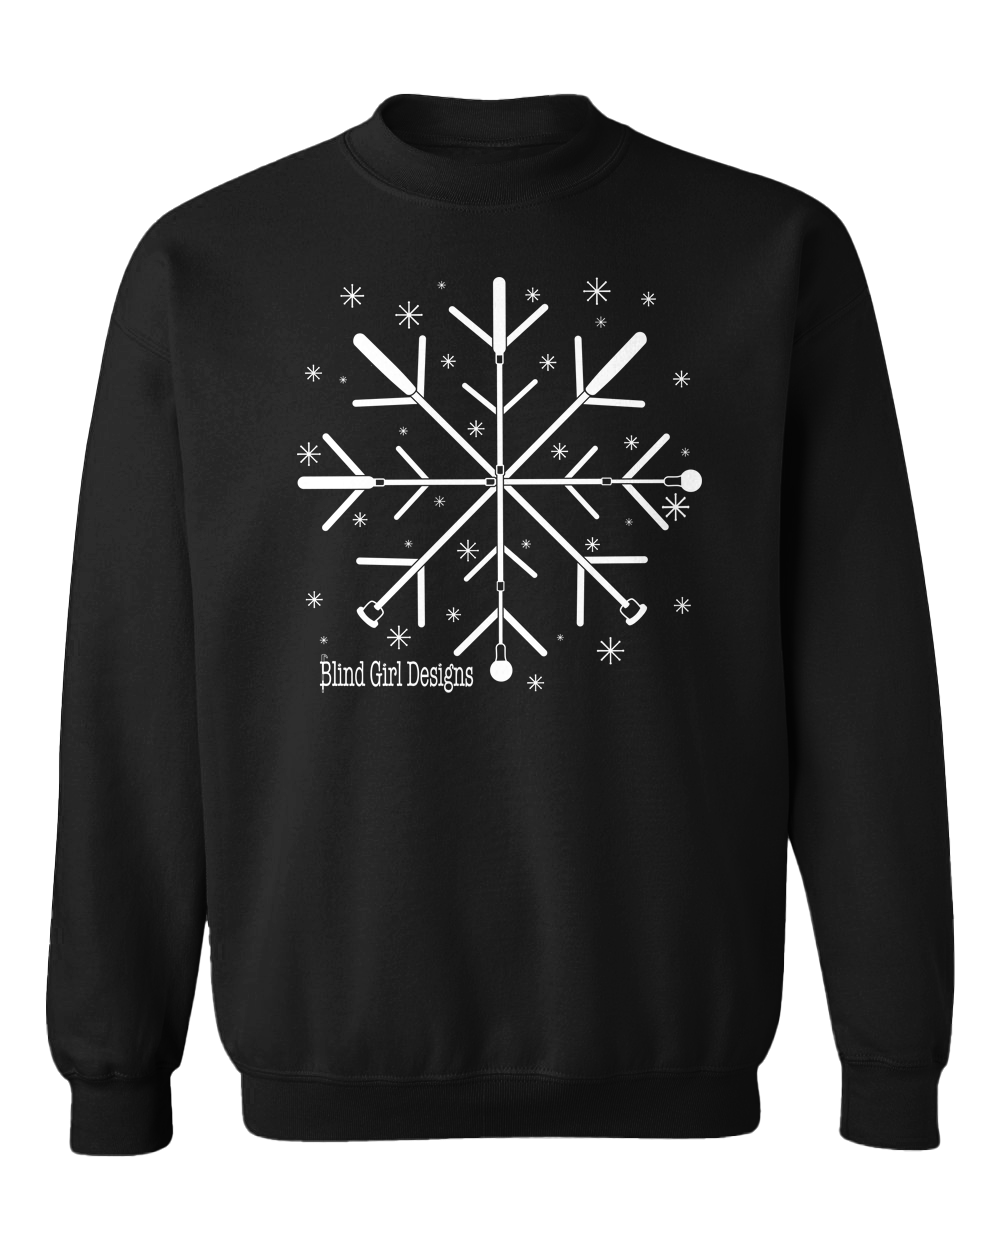 New 3D Super Tactile Snowflake White Cane Crew Sweatshirt - Black